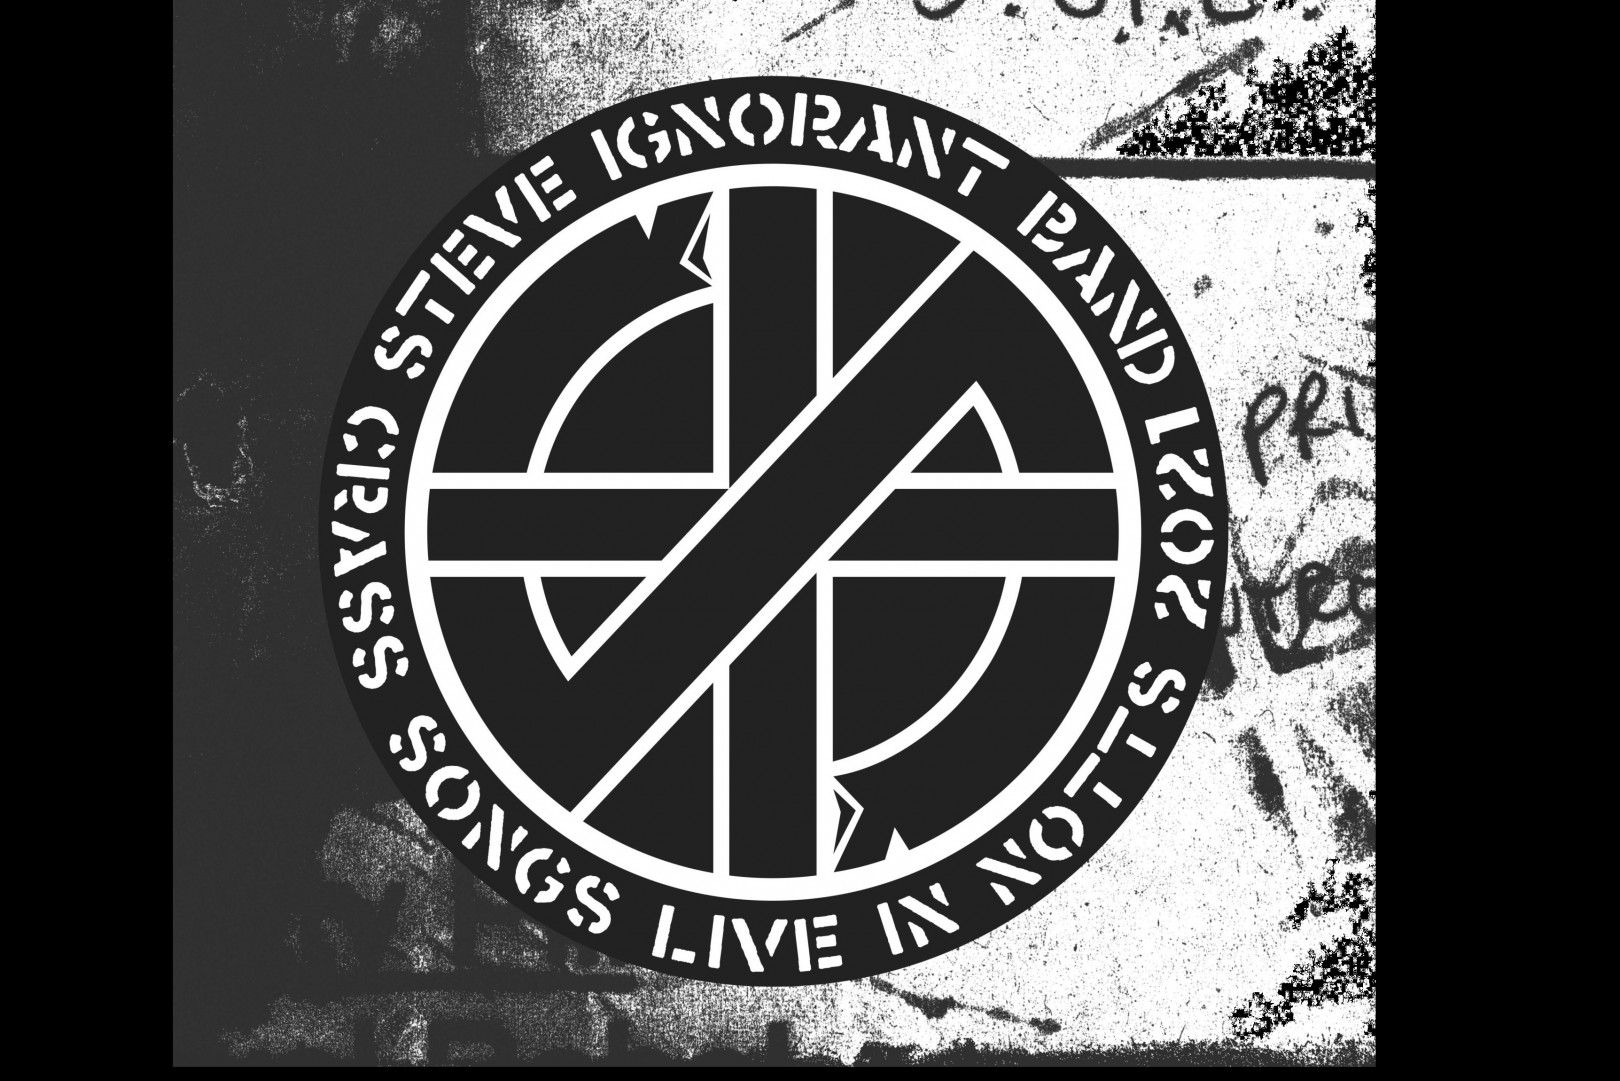 Steve Ignorant releases live album of Crass songs